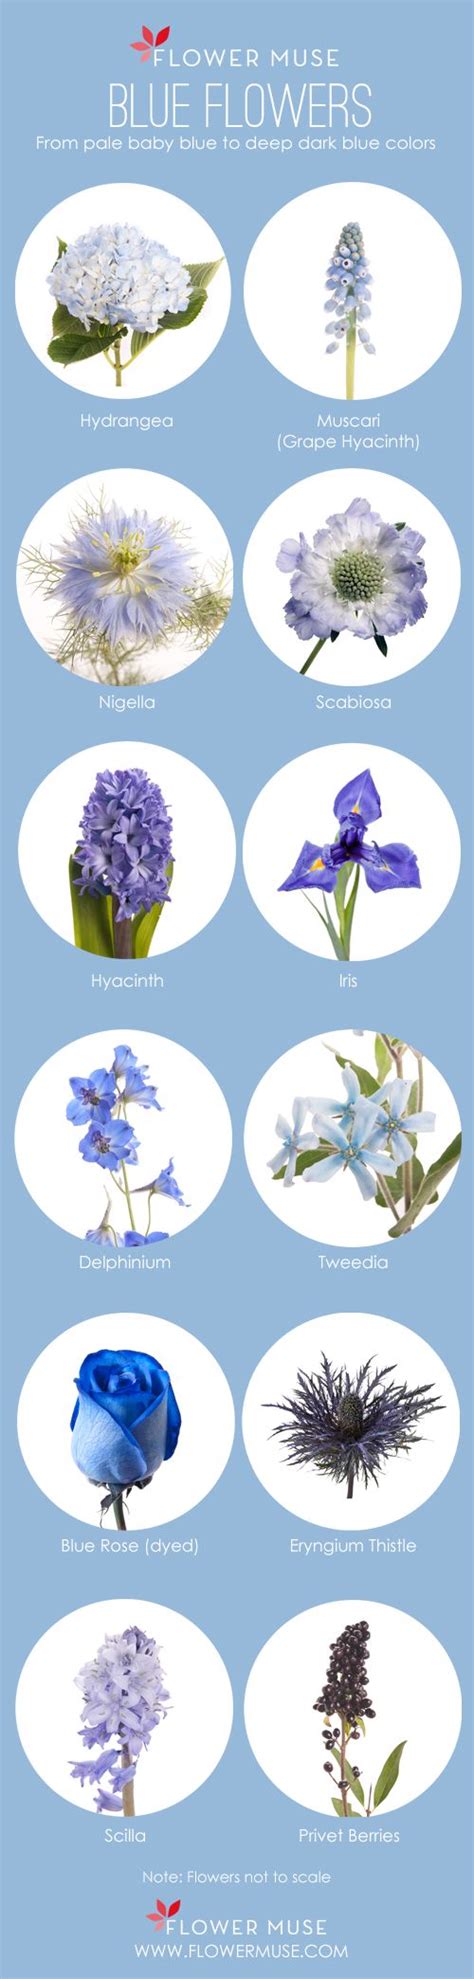 Blue Flower Names List Idalias Salon